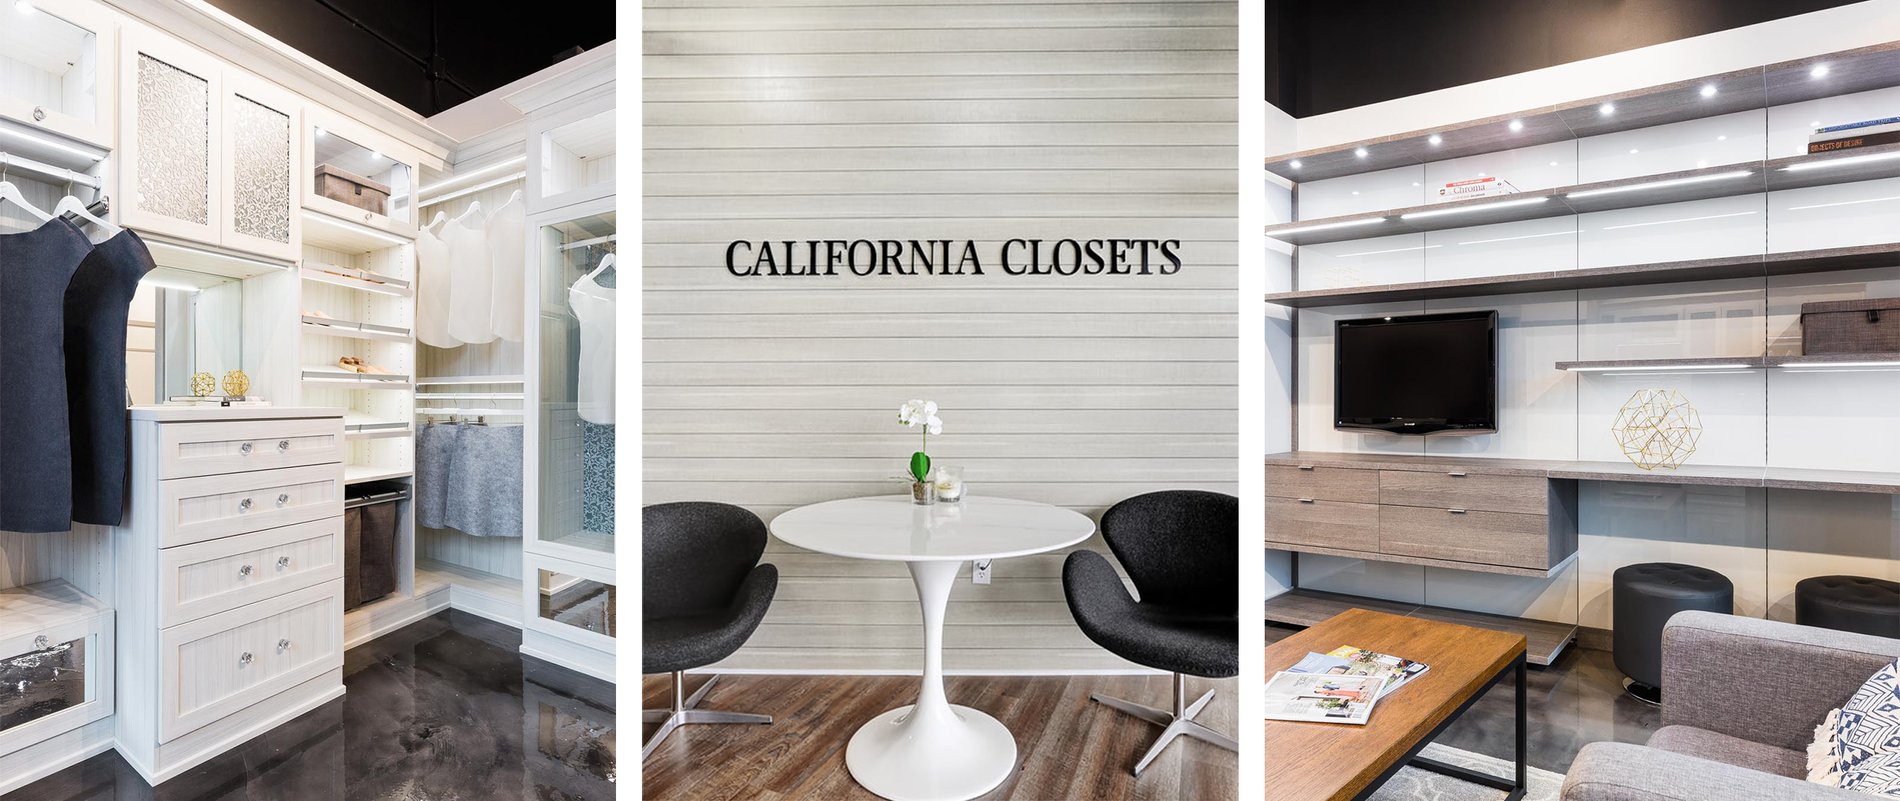 Custom Closets and Closet Systems Vancouver, British Columbia - California Closets